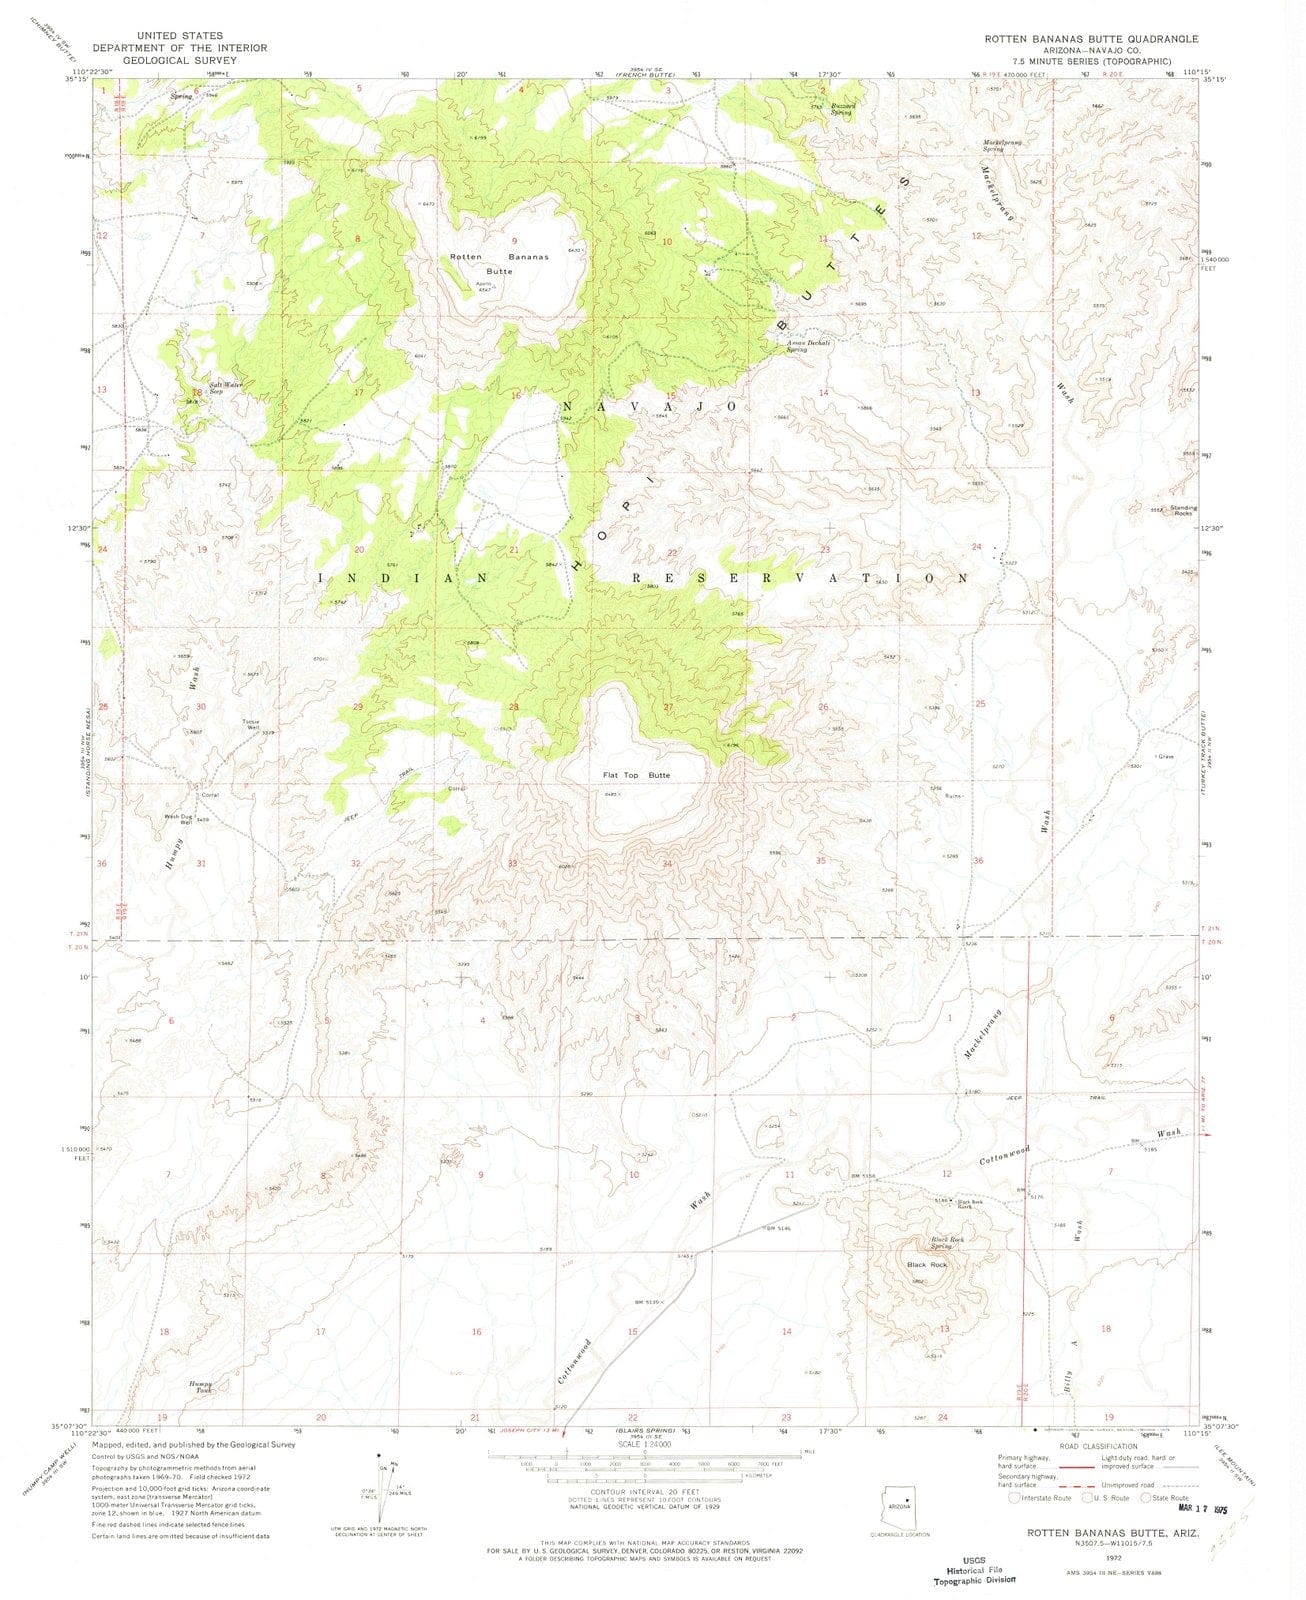 1972 Rotten Bananas Butte, AZ - Arizona - USGS Topographic Map